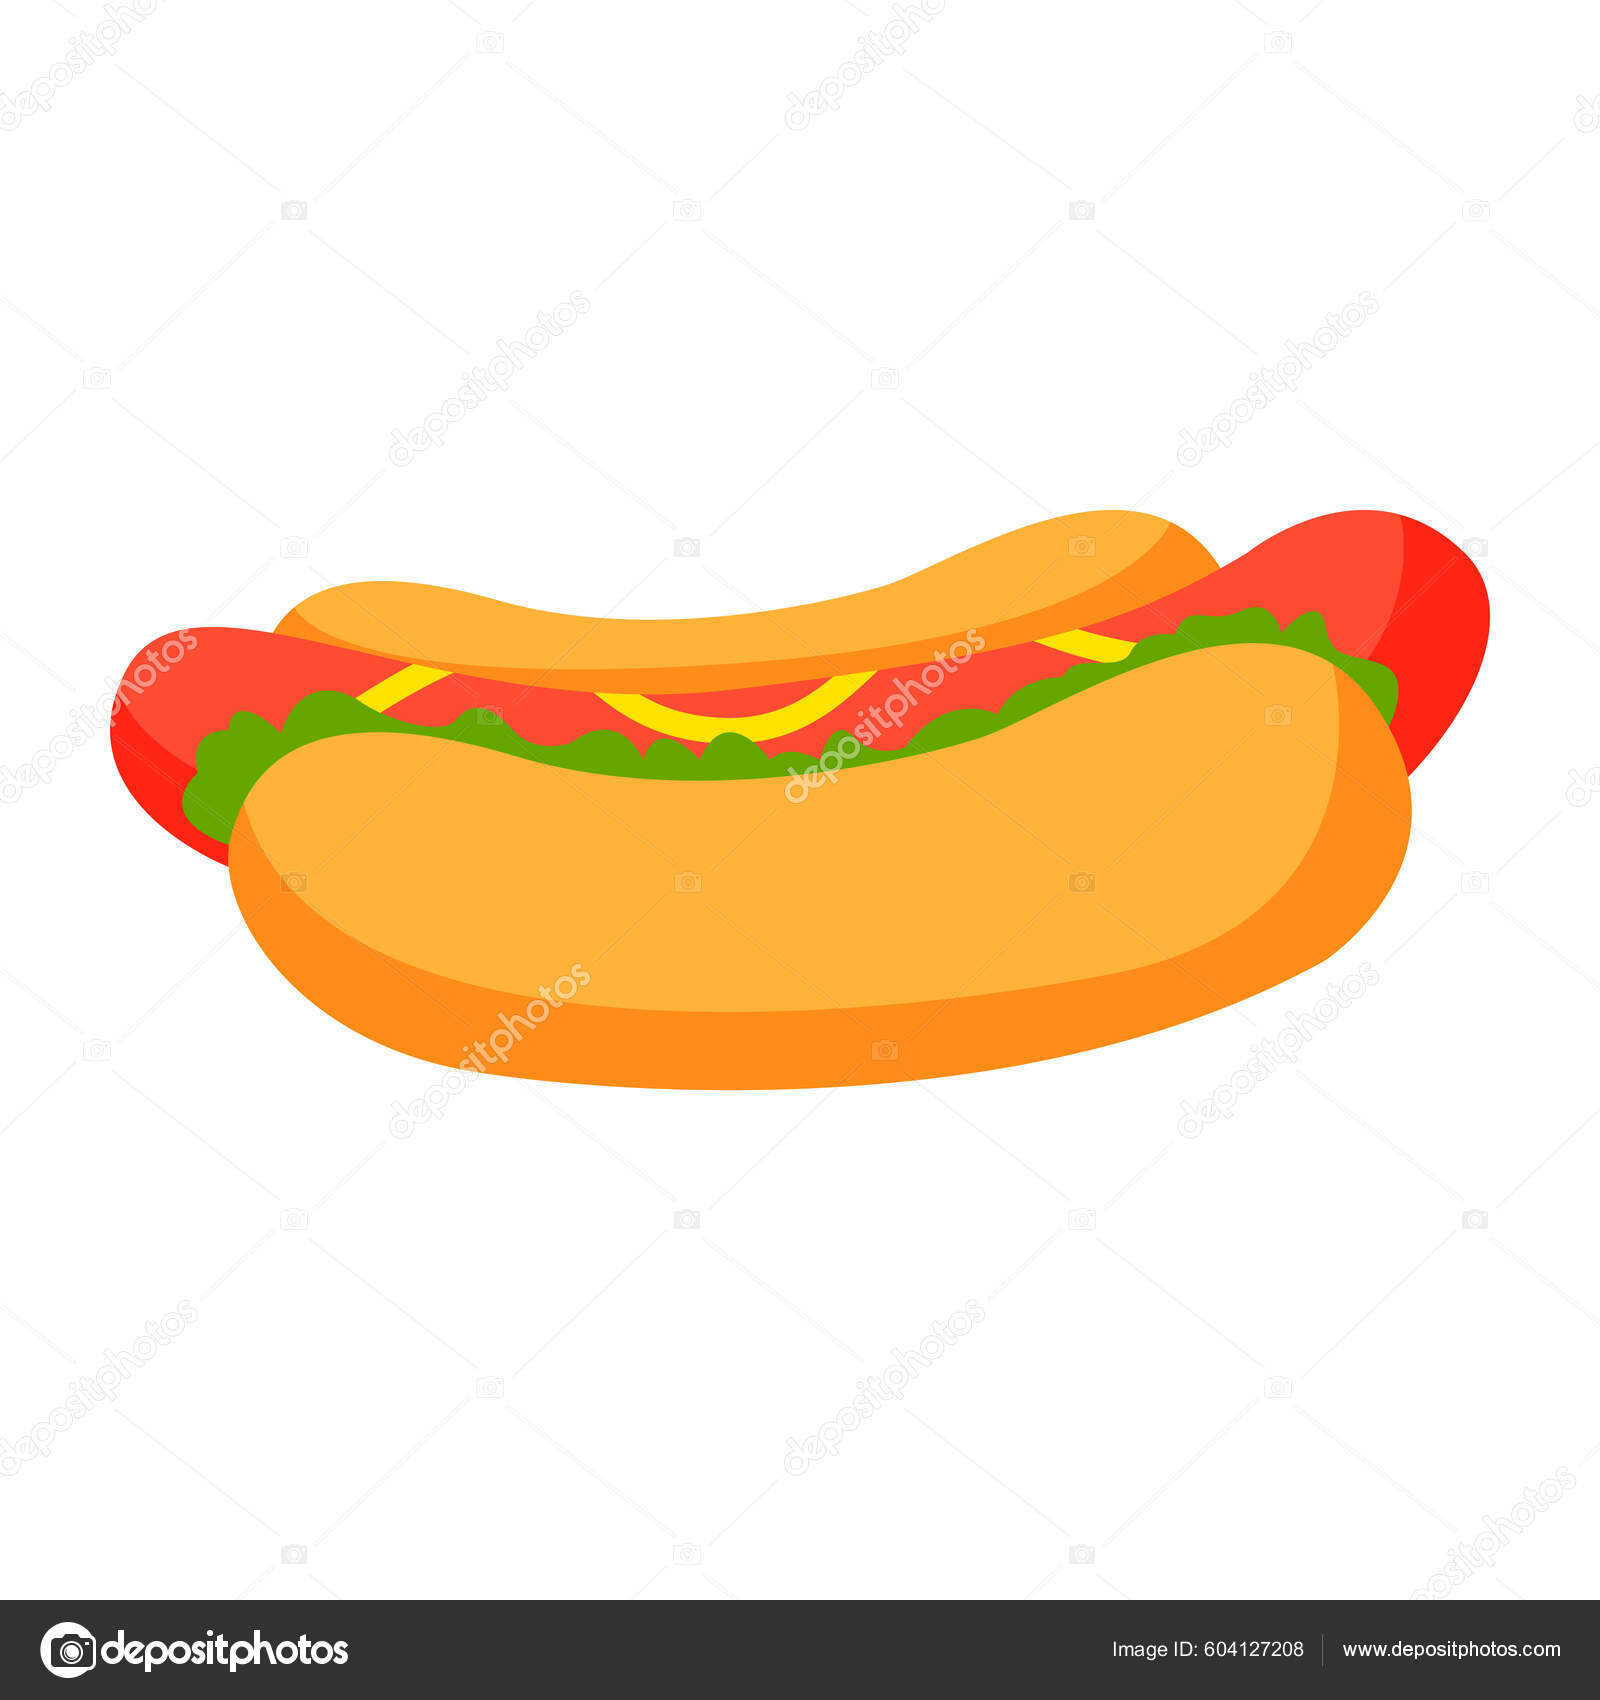 Very cute hot dog mascot stock vector. Illustration of sauce - 249240893